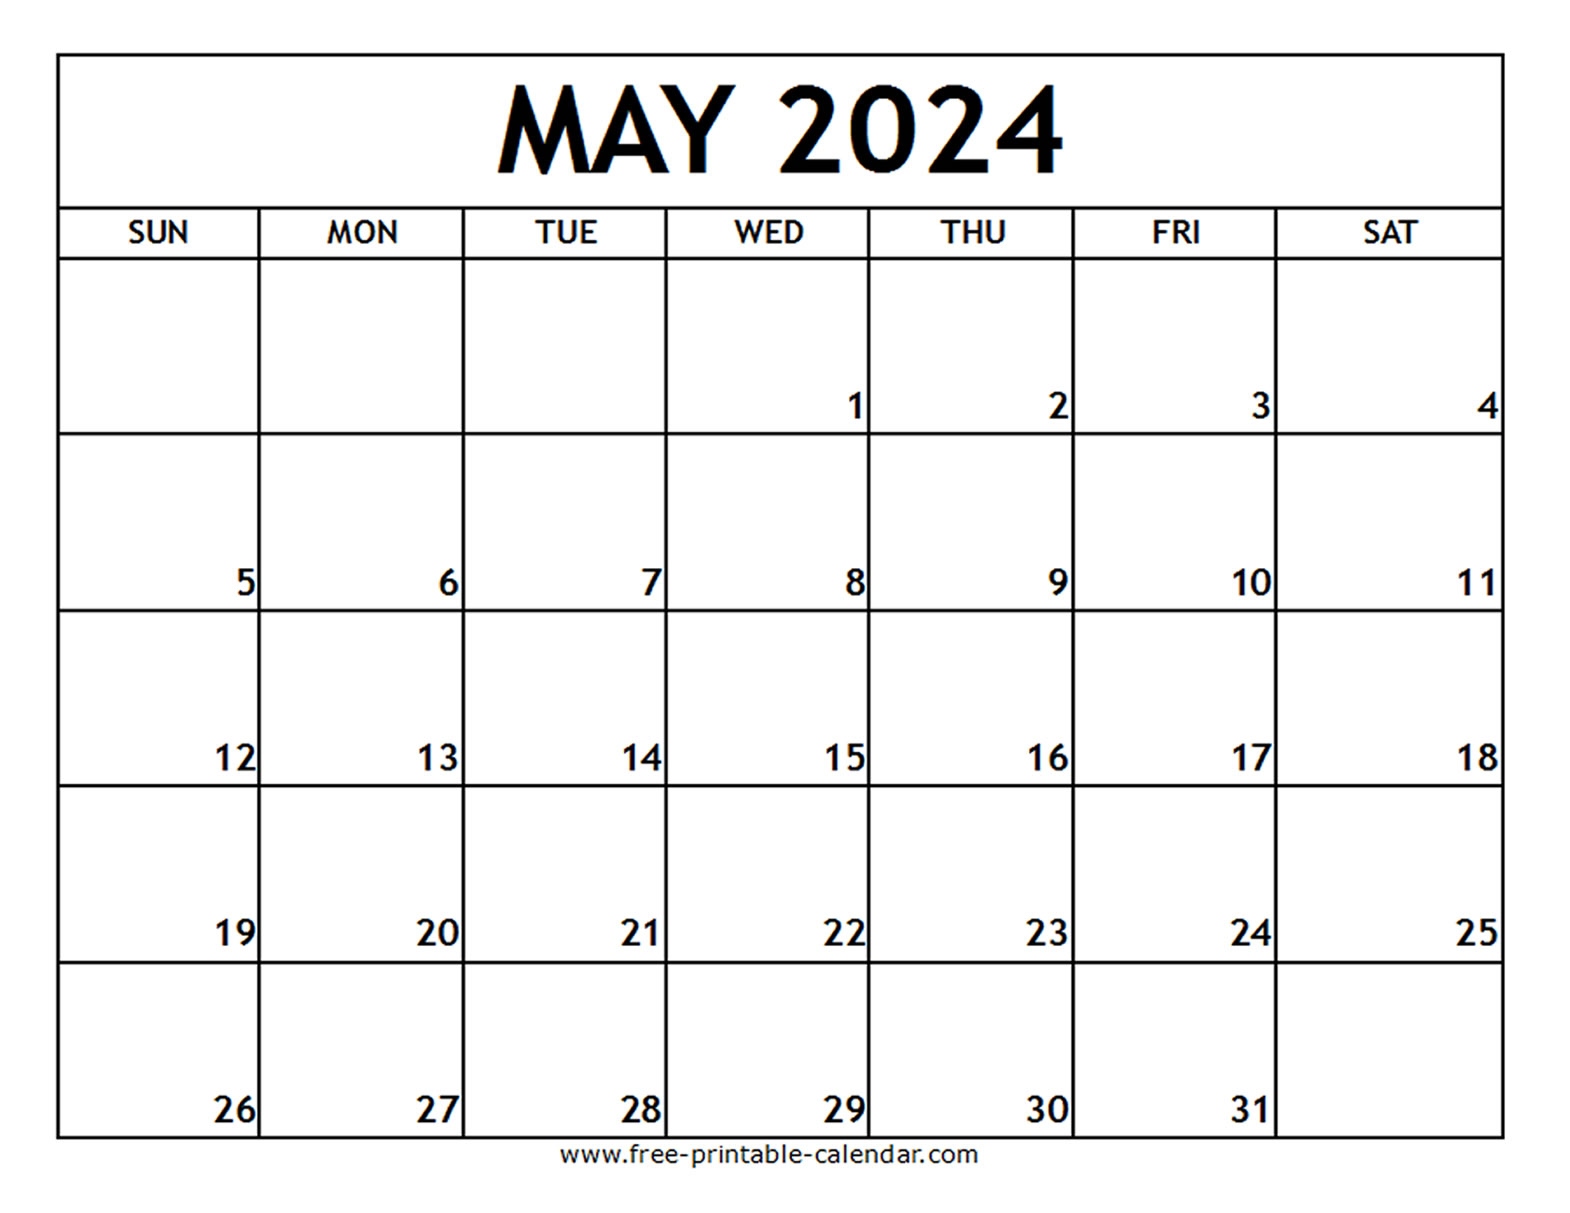 May 2024 Printable Calendar - Free-Printable-Calendar throughout Free Printable Calendar 2024 May June July